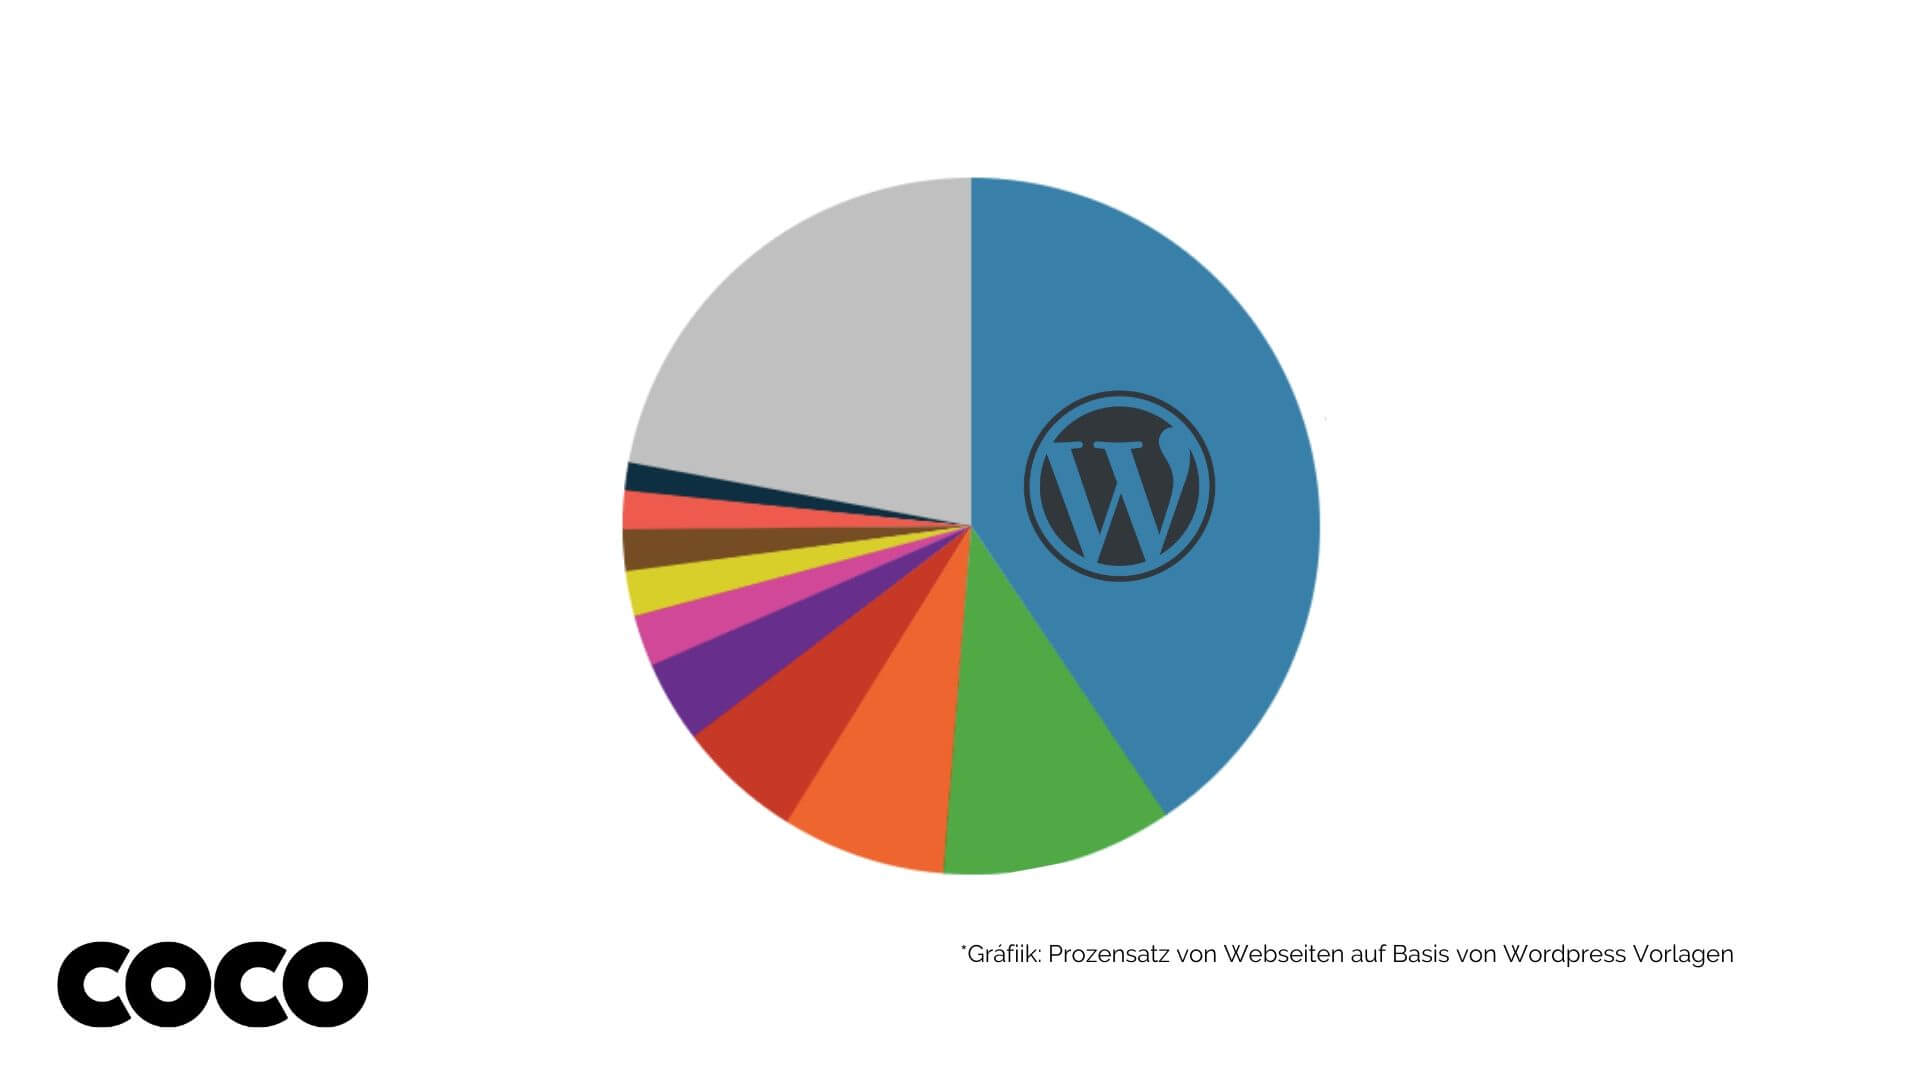 grafik wie viele websites wordpress benutzen